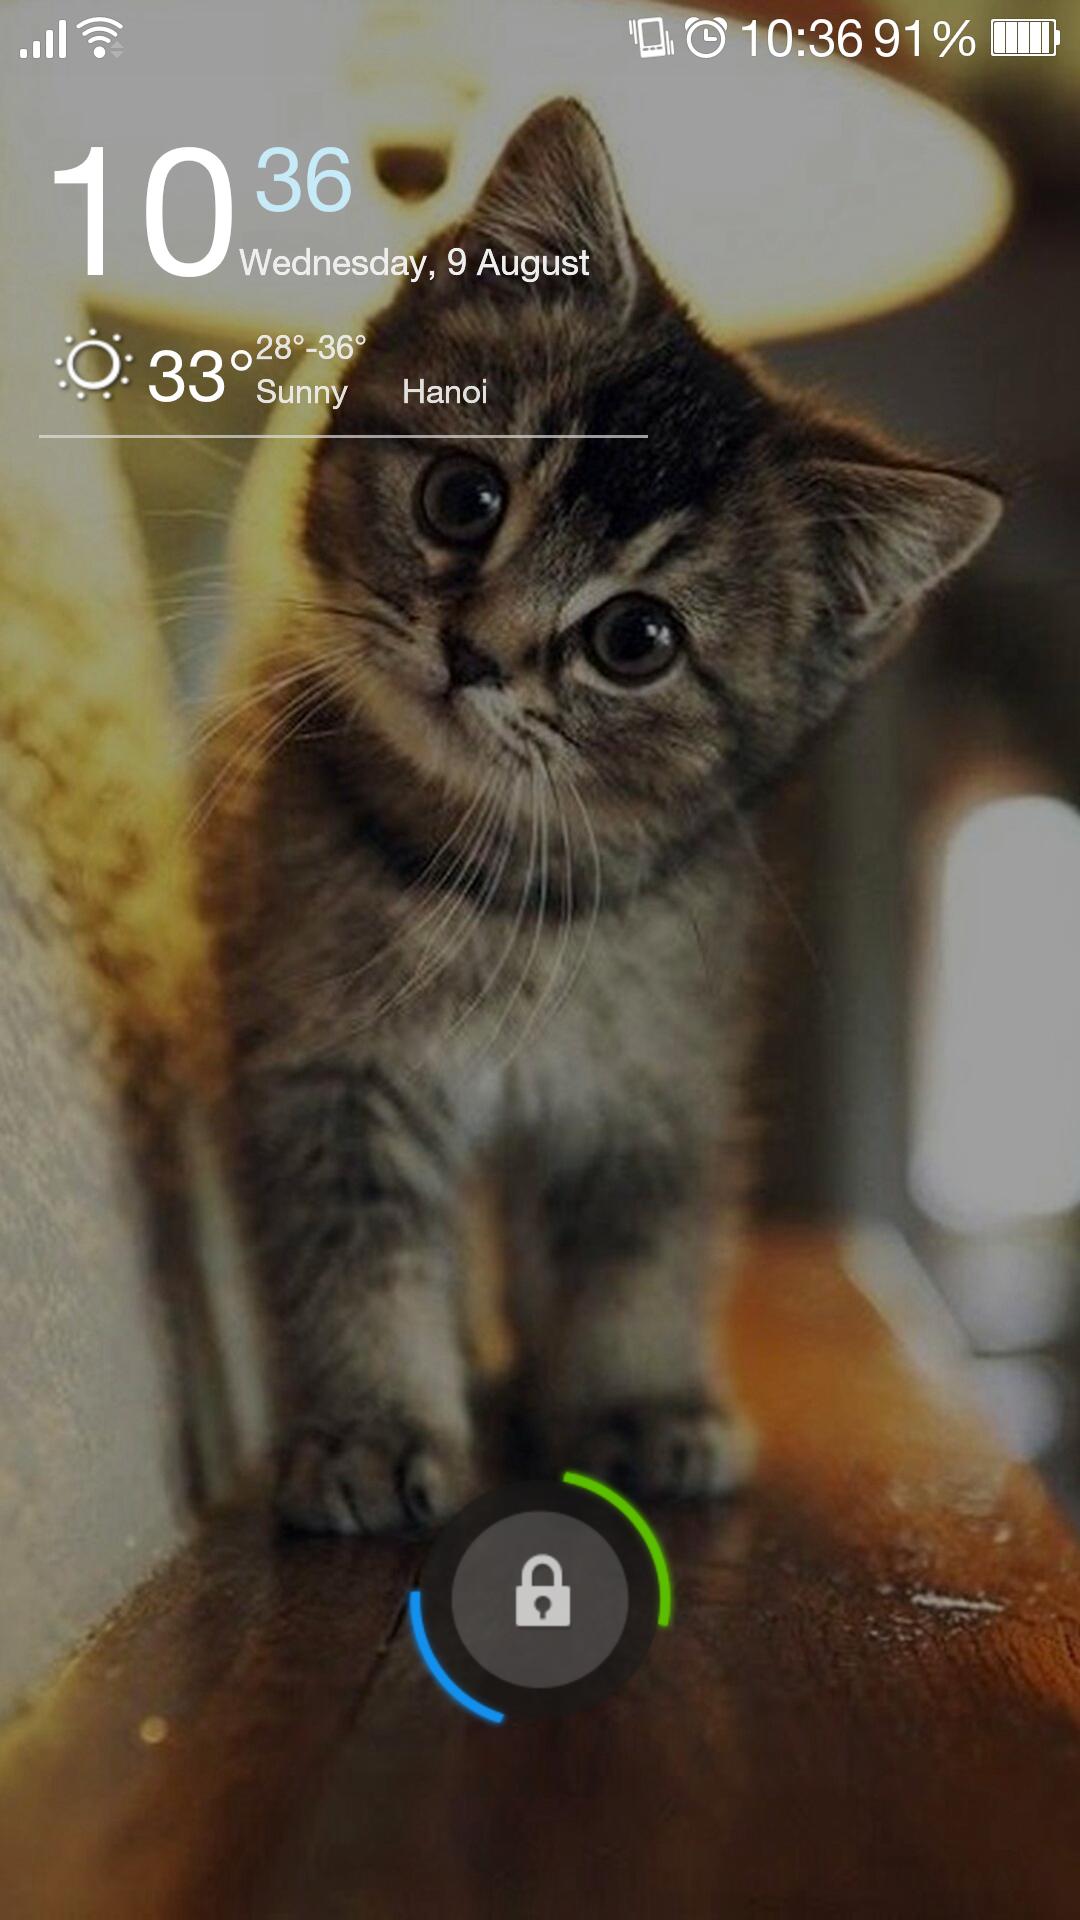 Wallpaper Kucing Lucu Layar Kunci Qhd For Android Apk Download